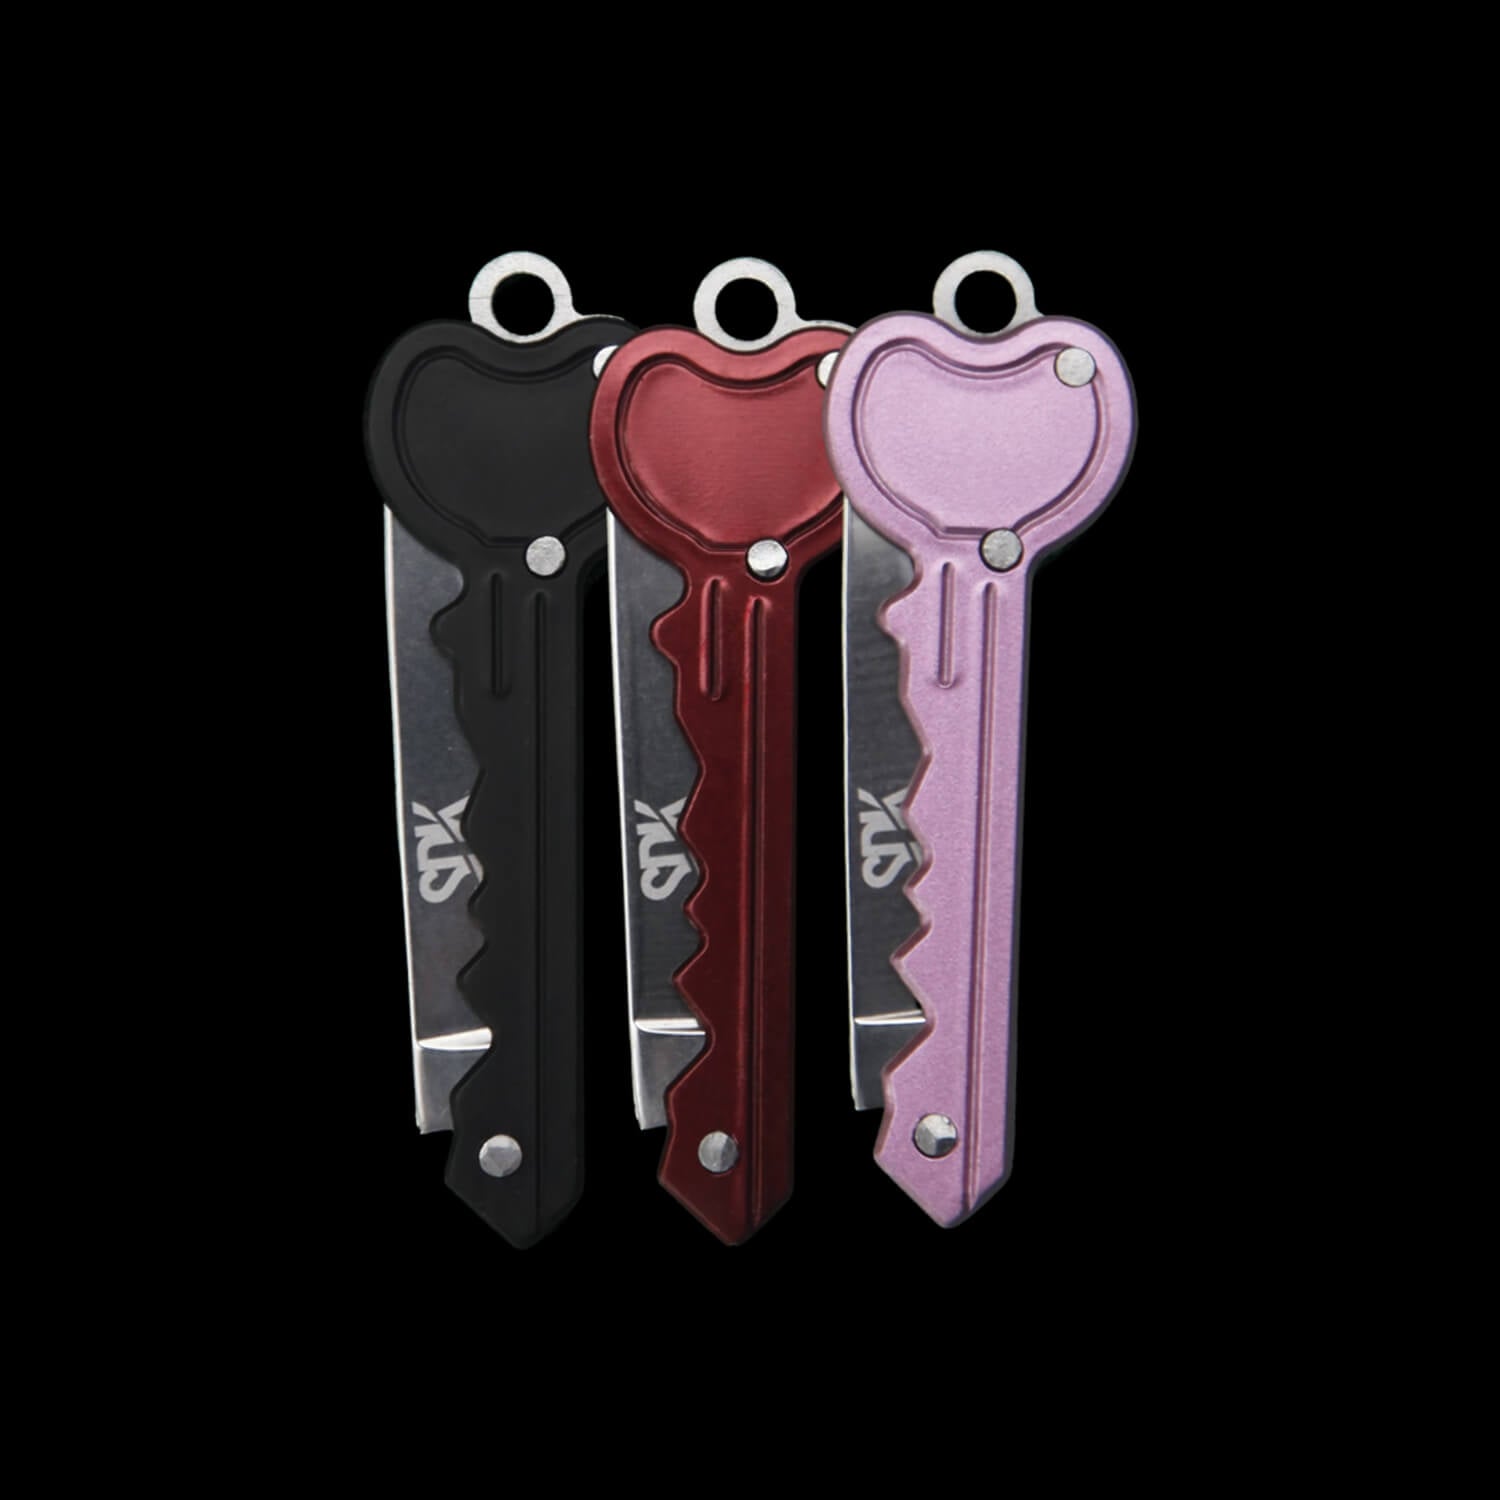 SDK Heart Key Knife, Black, Red & Pink (stainless steel heart-shaped flip knife)